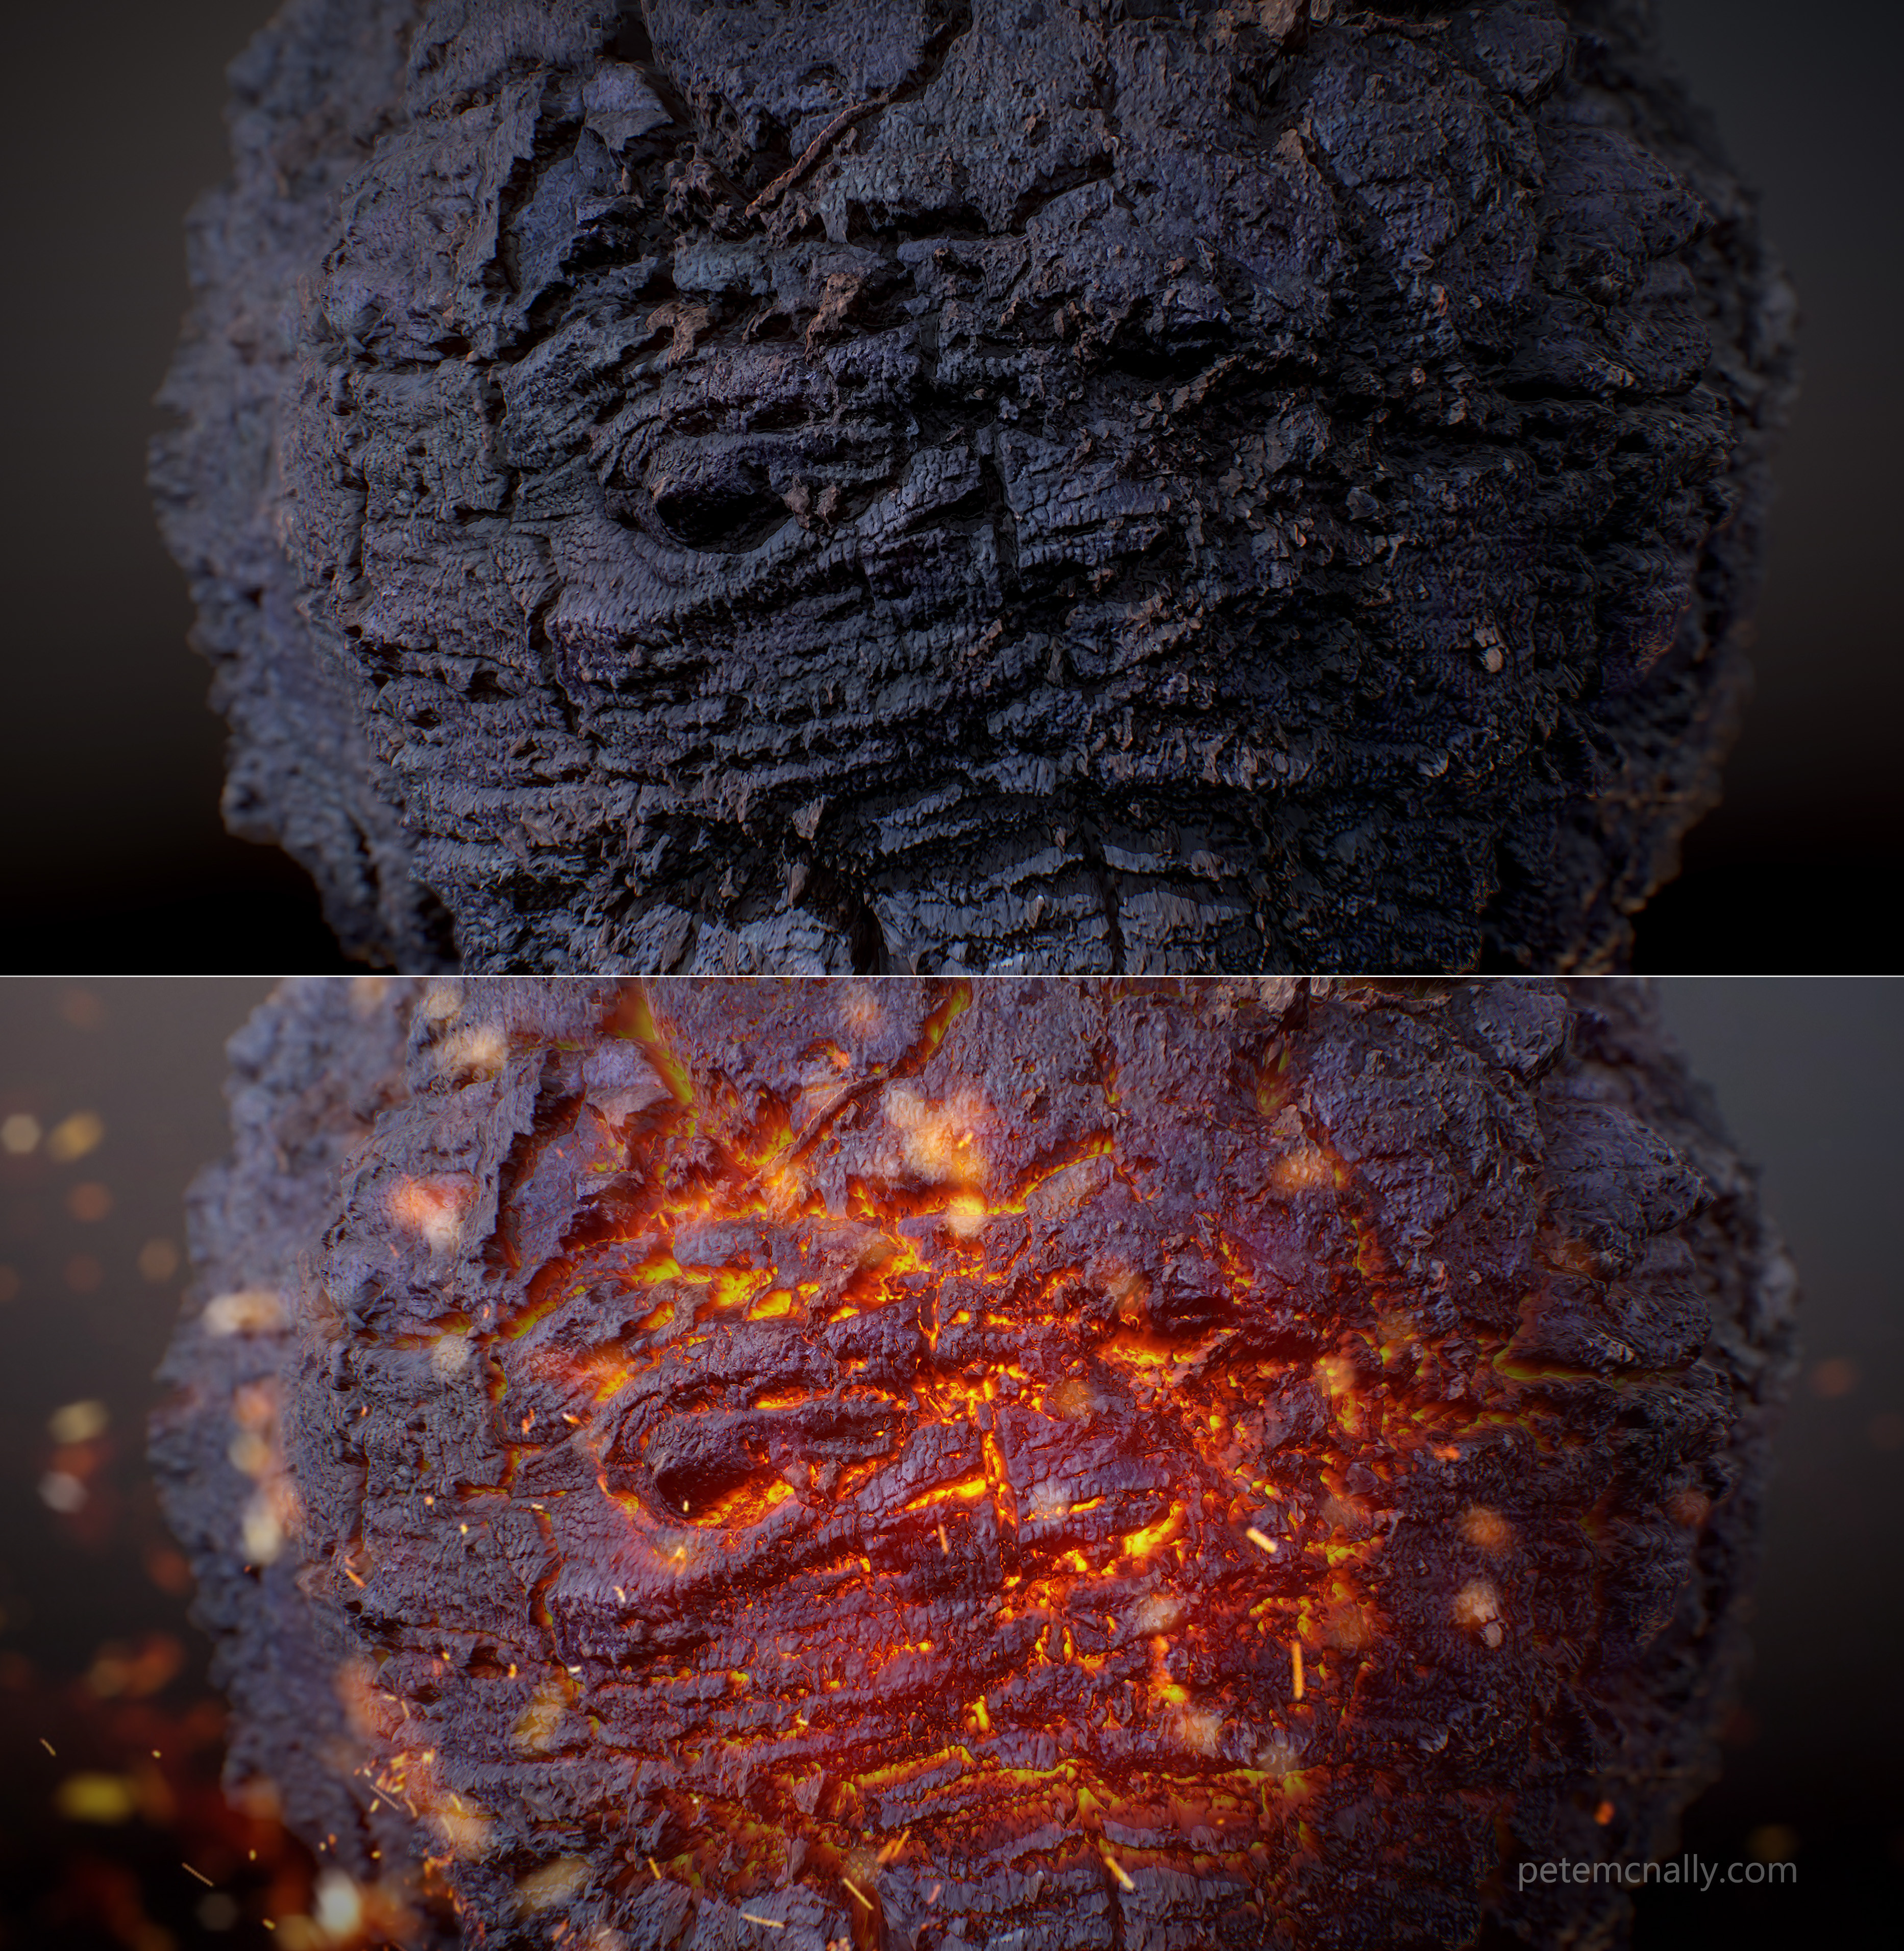 Top: Initial test
Bottom: Still burning embers